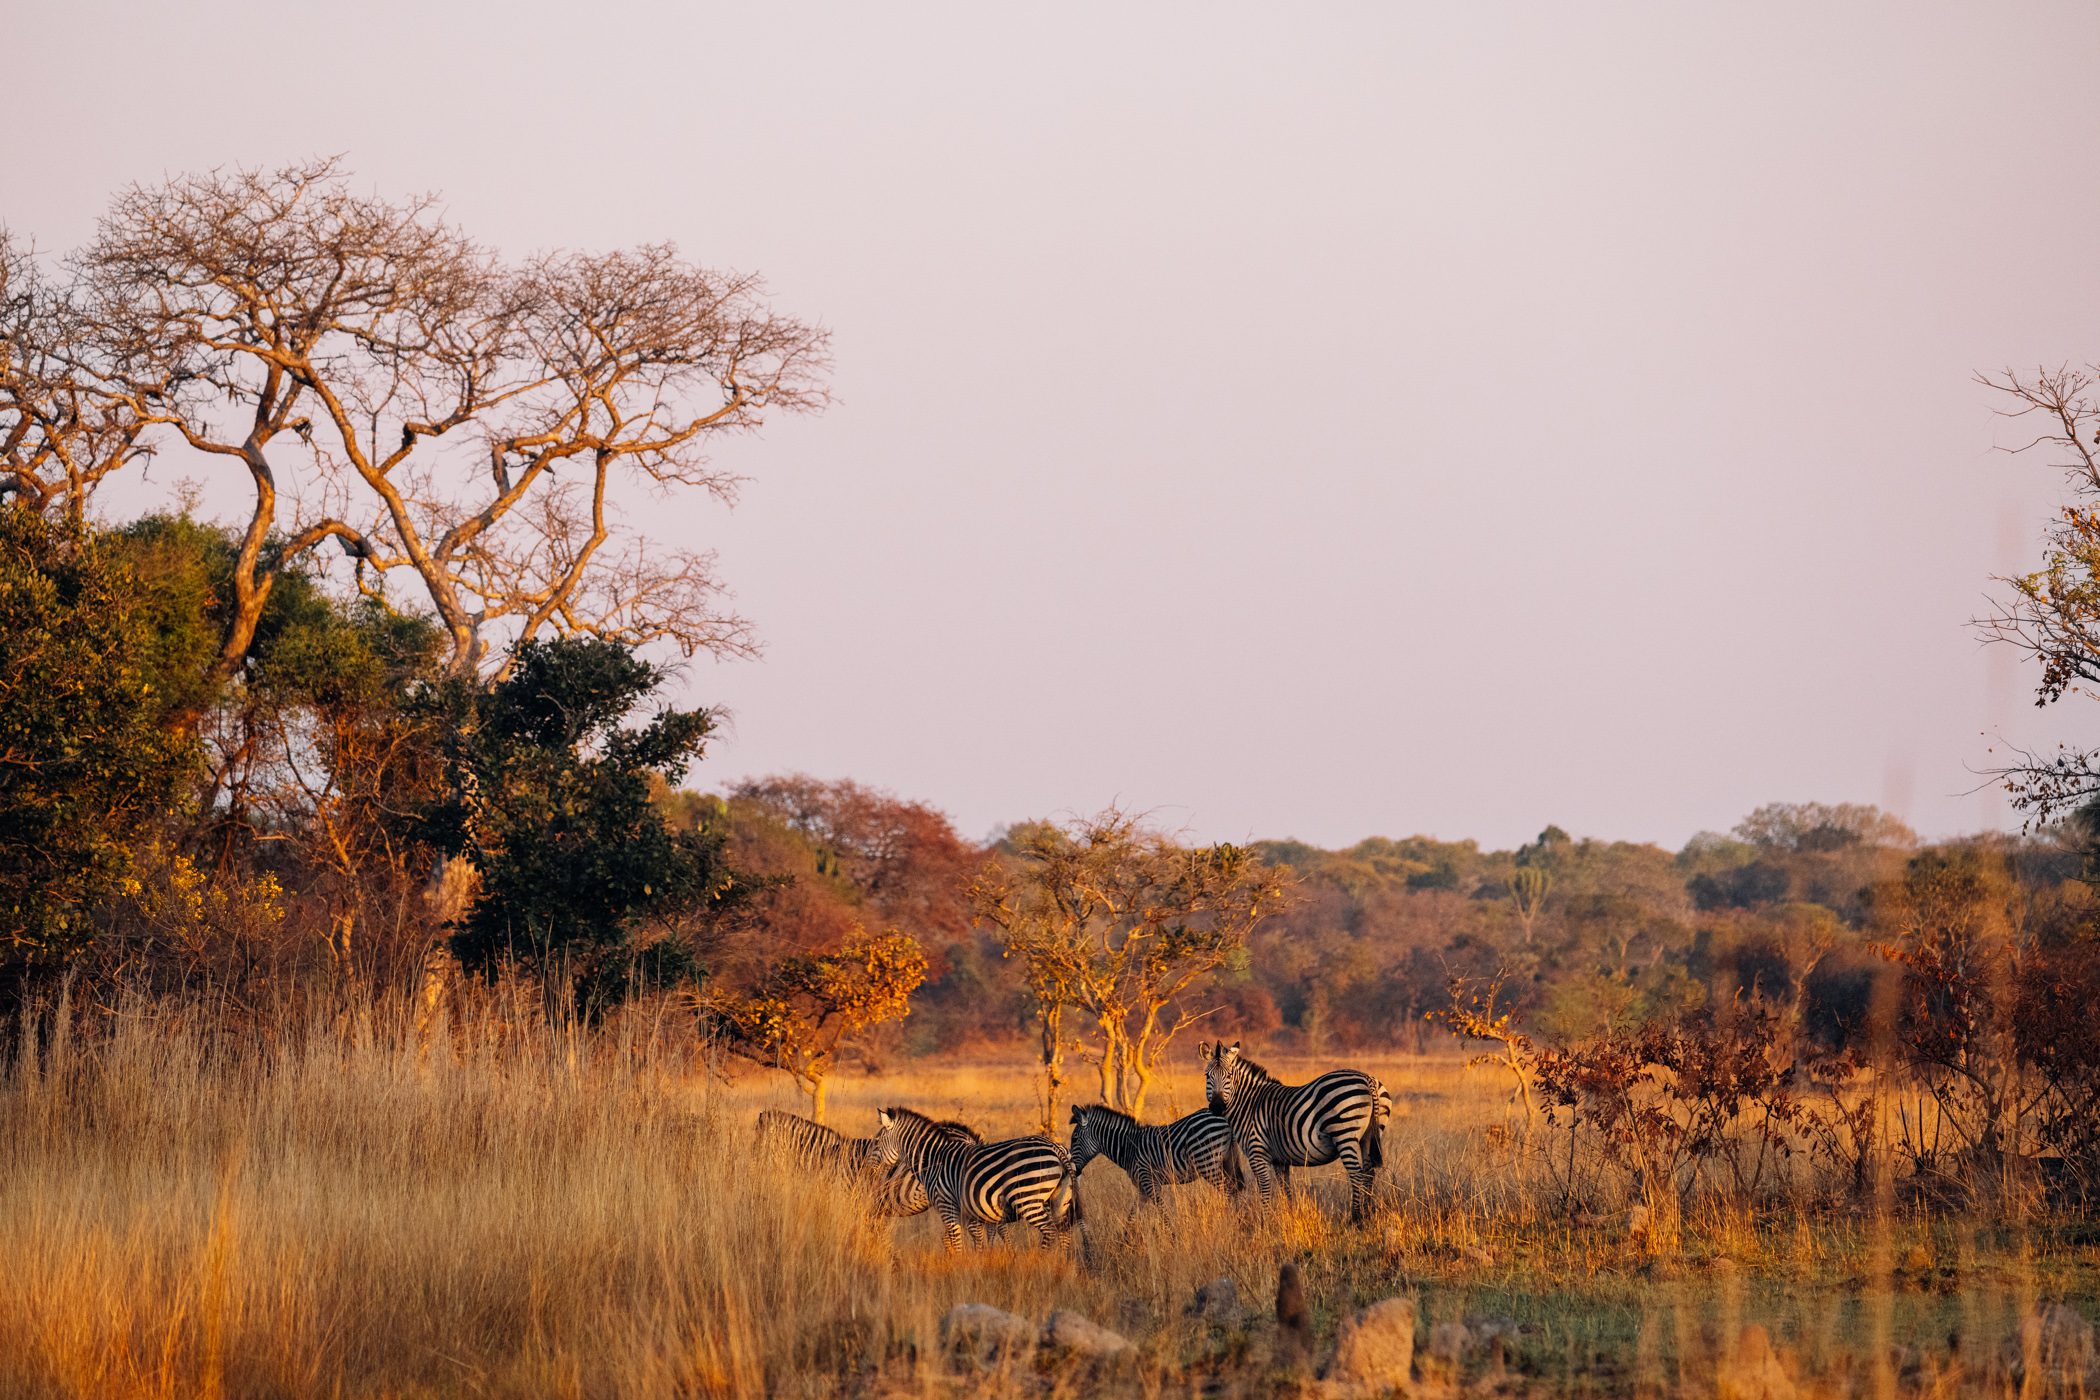 Zambia Safari Travel Guide and Itinerary covering Lusaka, Livingstone with Victoria Falls, Lower Zambezi National Park, South Luangwa National Park, Kafue National Park and Busanga Plains